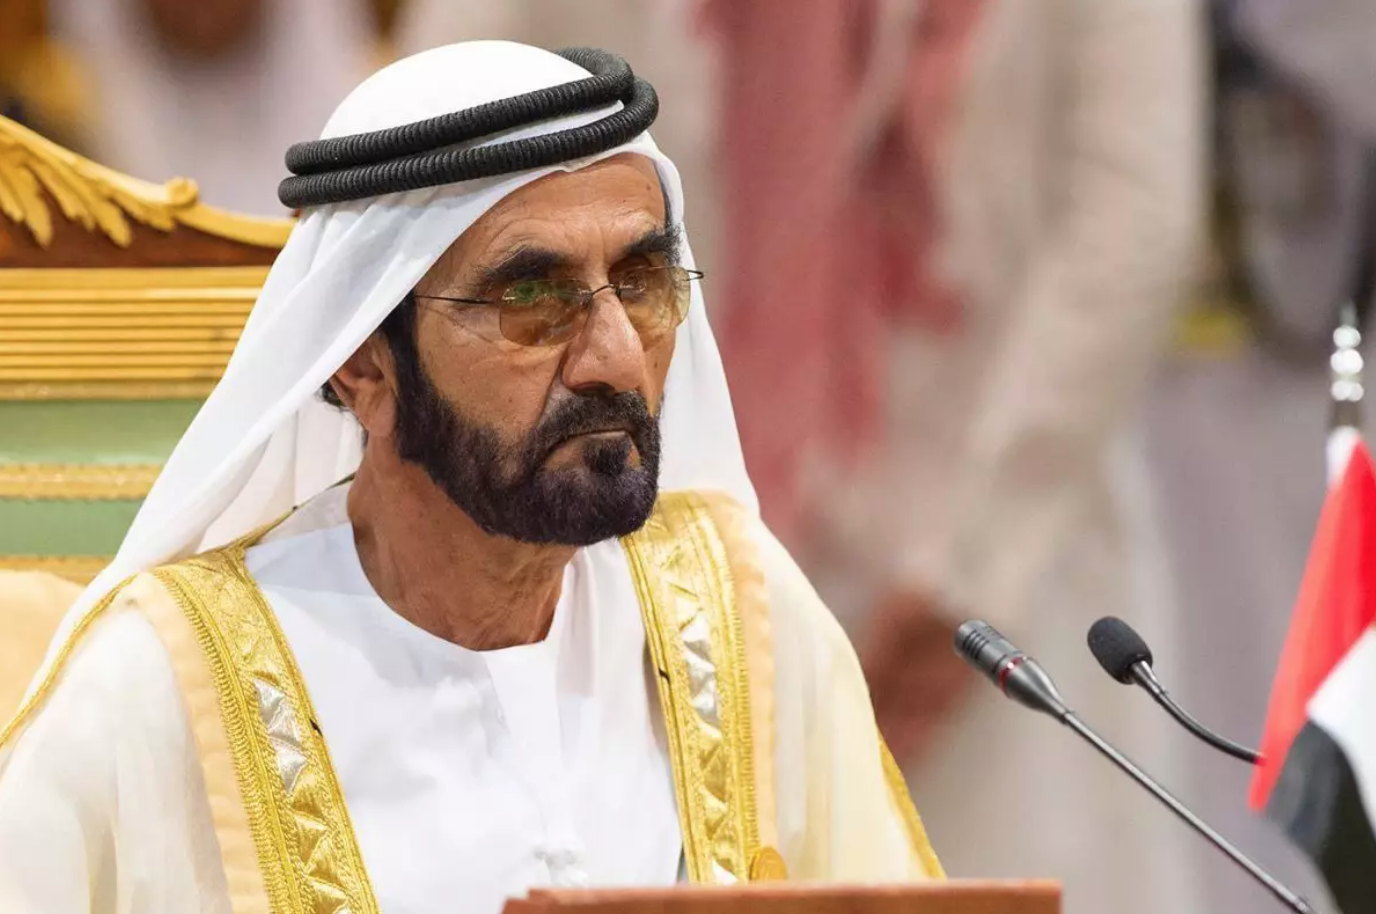 El primer ministro de Emiratos Árabes Unidos (EAU) y emir de Dubái, Mohamed bin Rashid al Maktum - -/Saudi Press Agency/dpa - Archivo